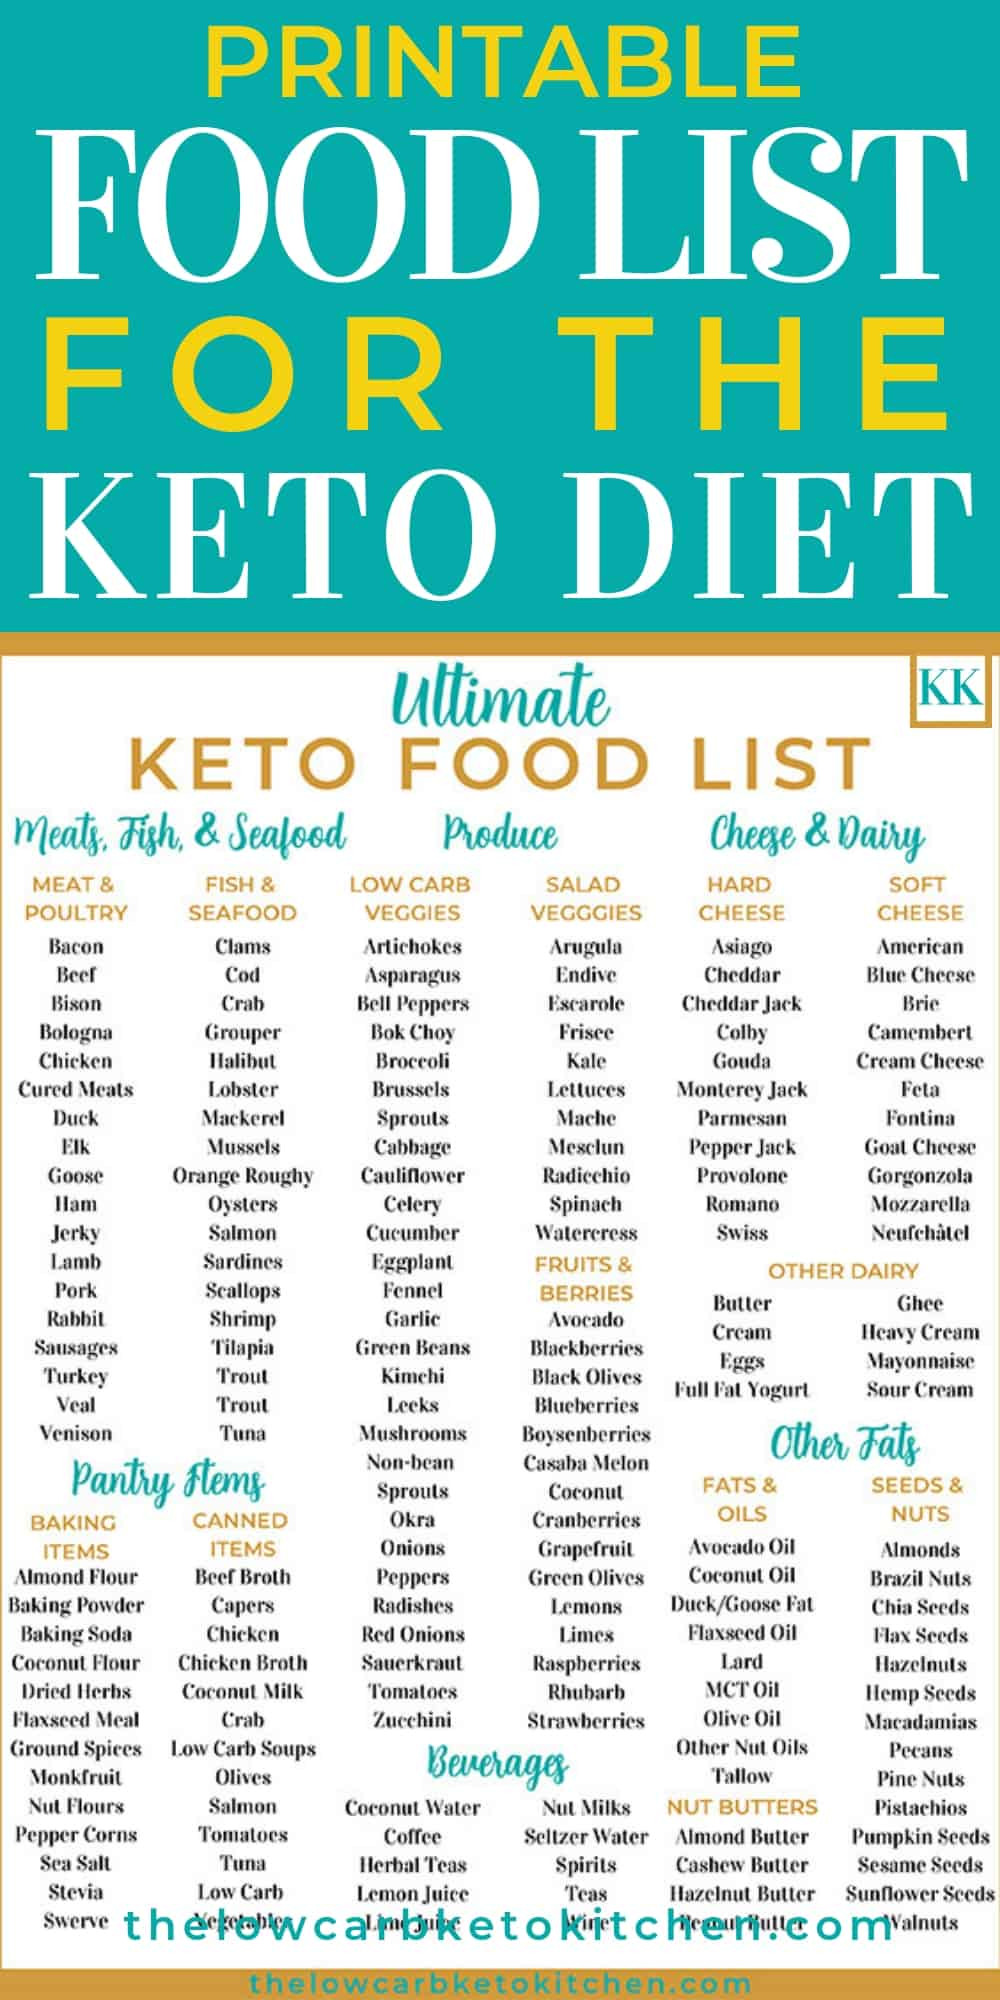 Ketosis Diet Food List
 The Ultimate Keto Food List with Printable